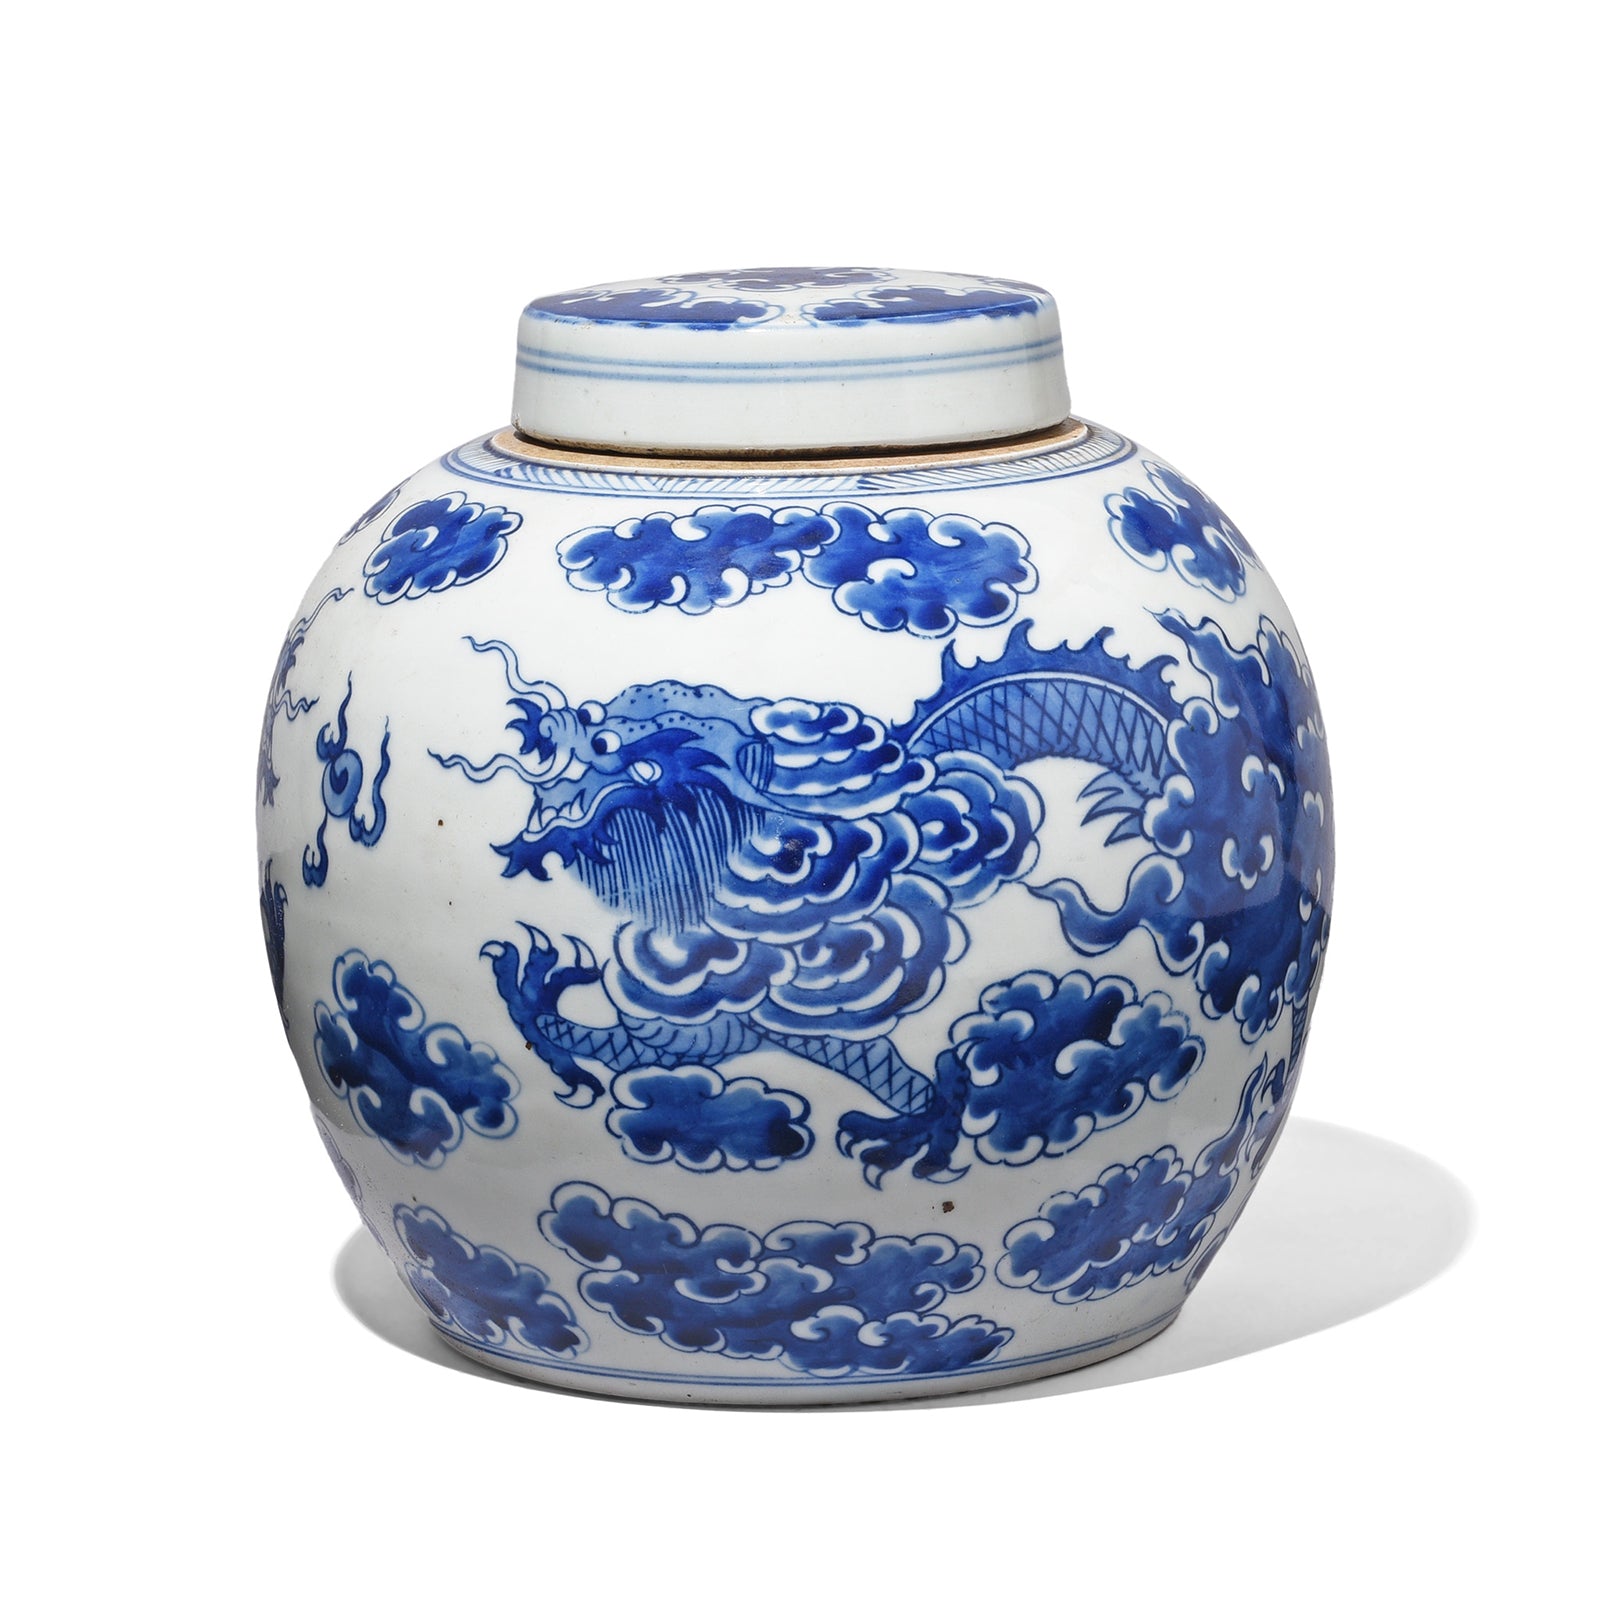 Handmade Chinese Reproduction Blue & White Porcelain Ginger Jar - Dragon Design